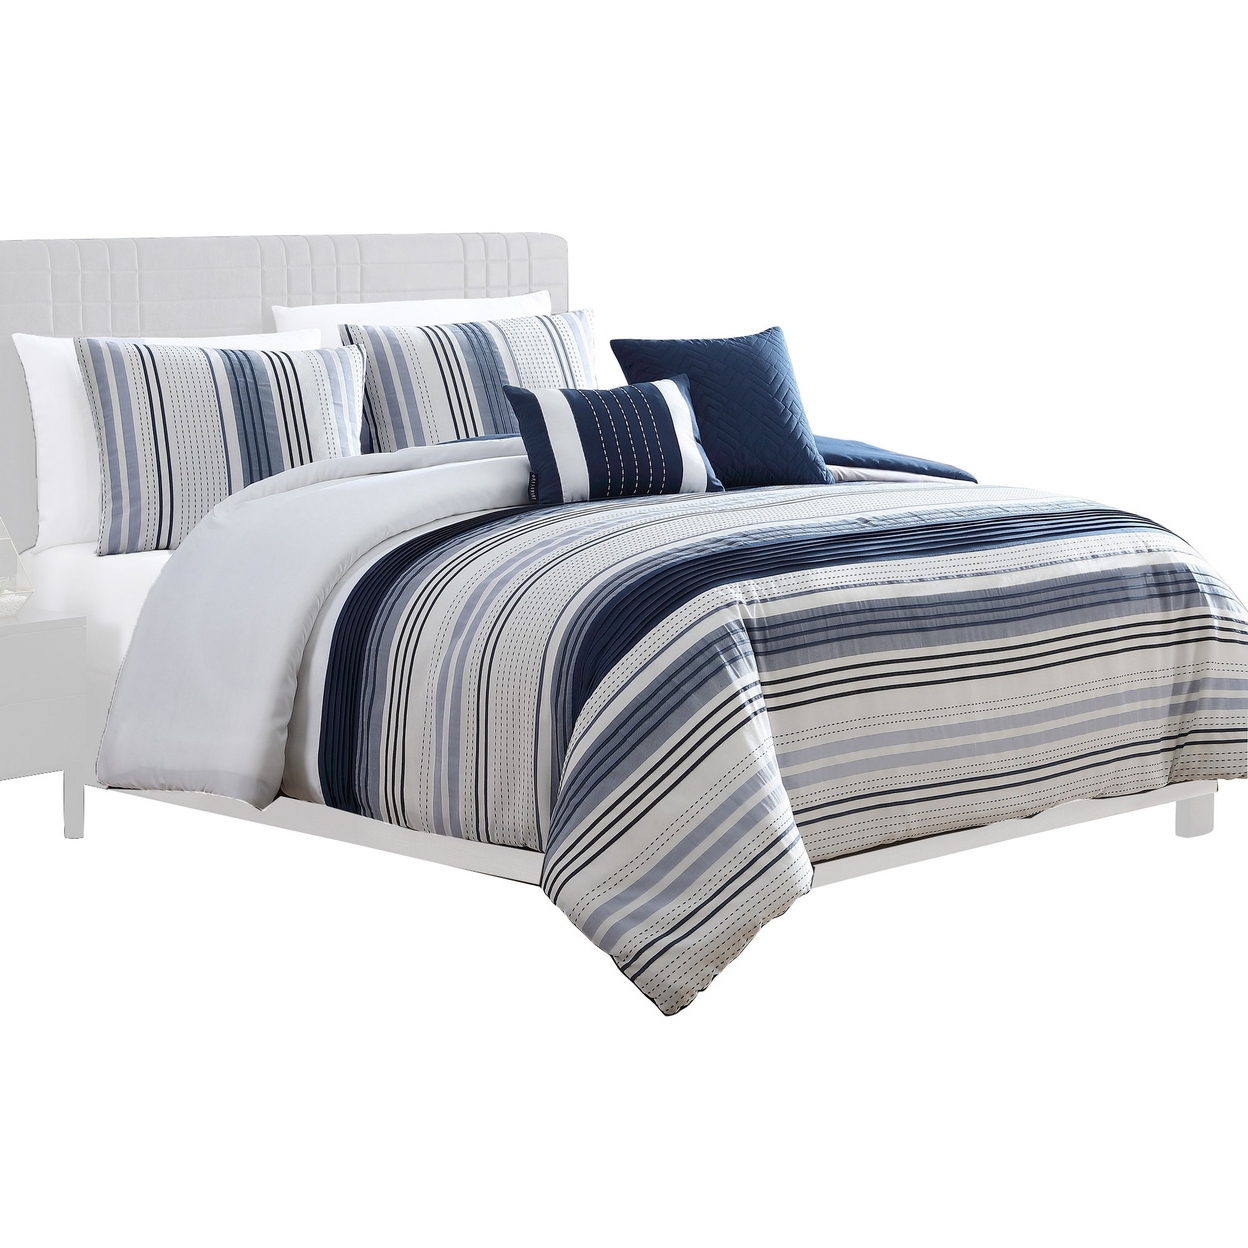 Alfa 5 Piece Queen Comforter Set, Jacquard Woven Stripes, Blue, White - Saltoro Sherpi